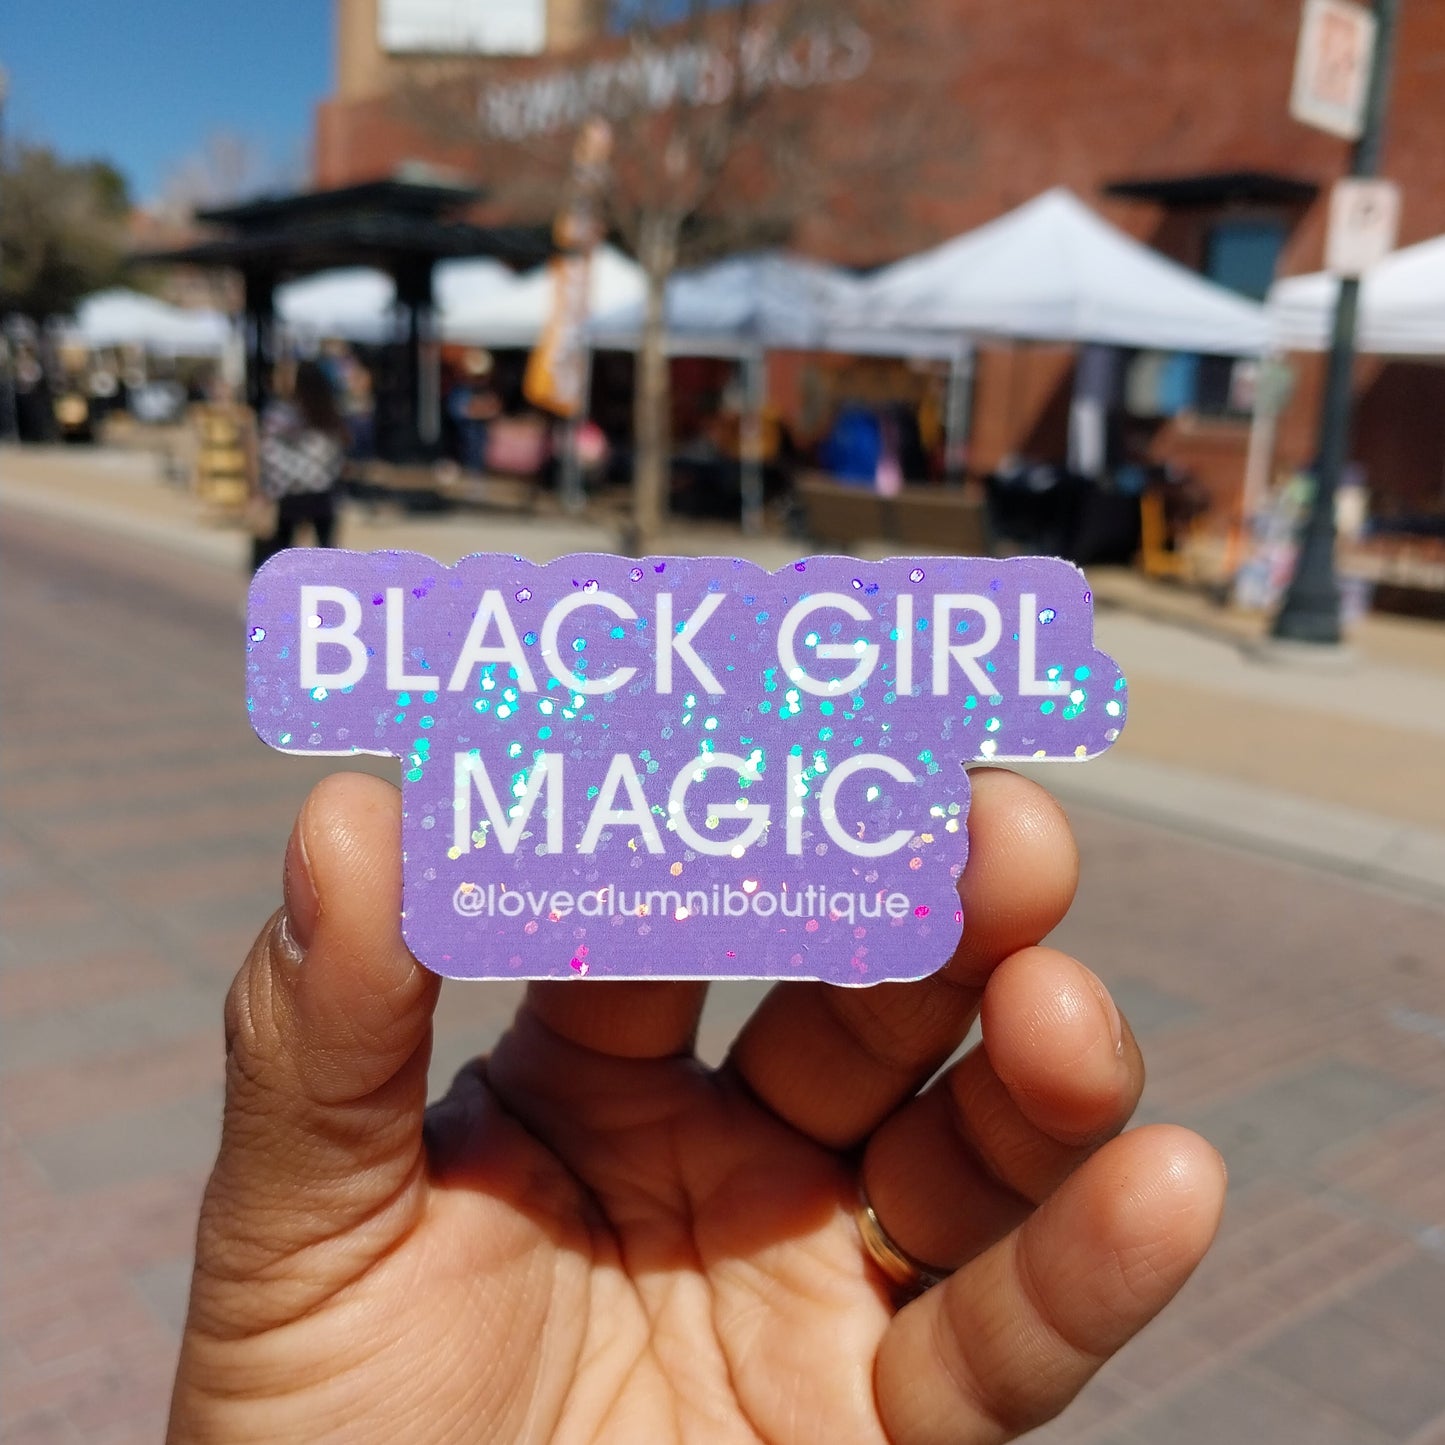 Black Girl Magic Sticker